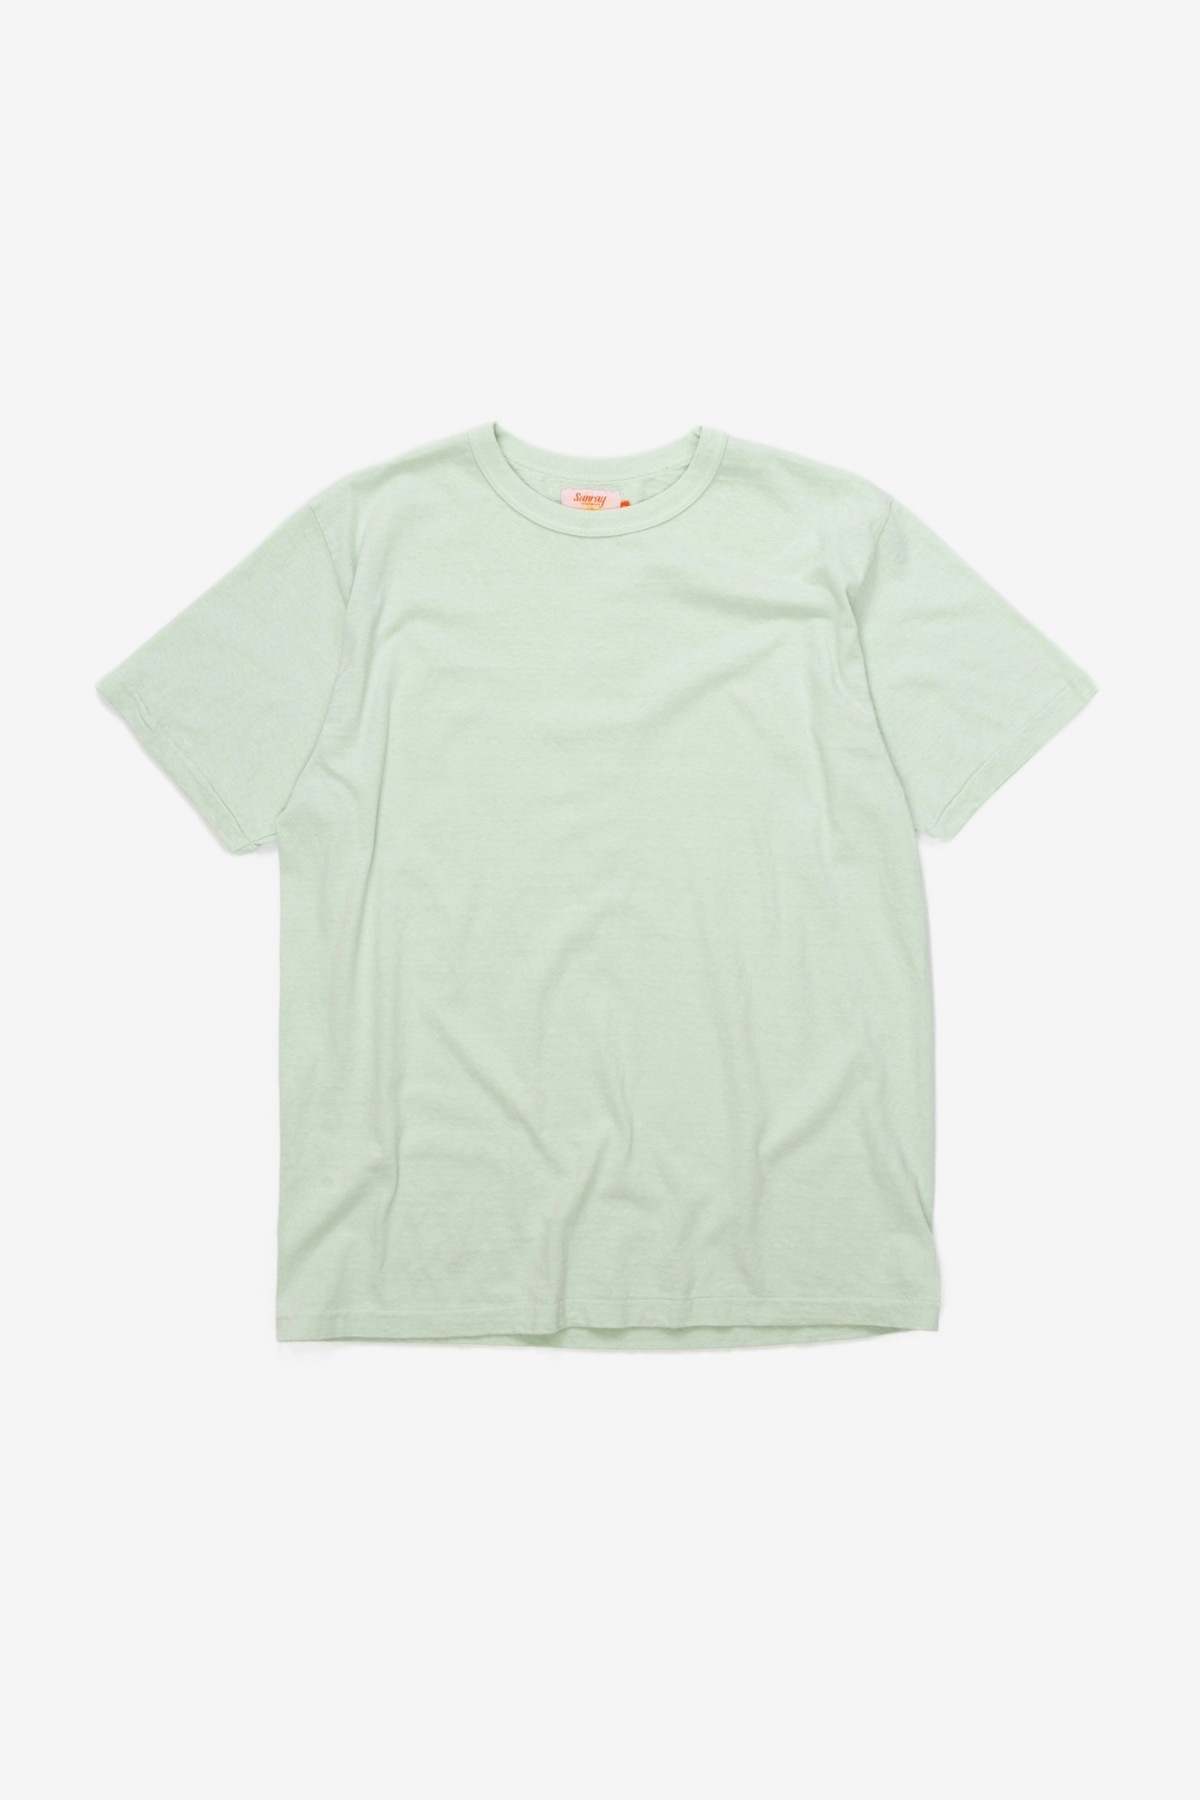 Sunray Sportswear Haleiwa Short Sleeve T-Shirt in Gossamer Green